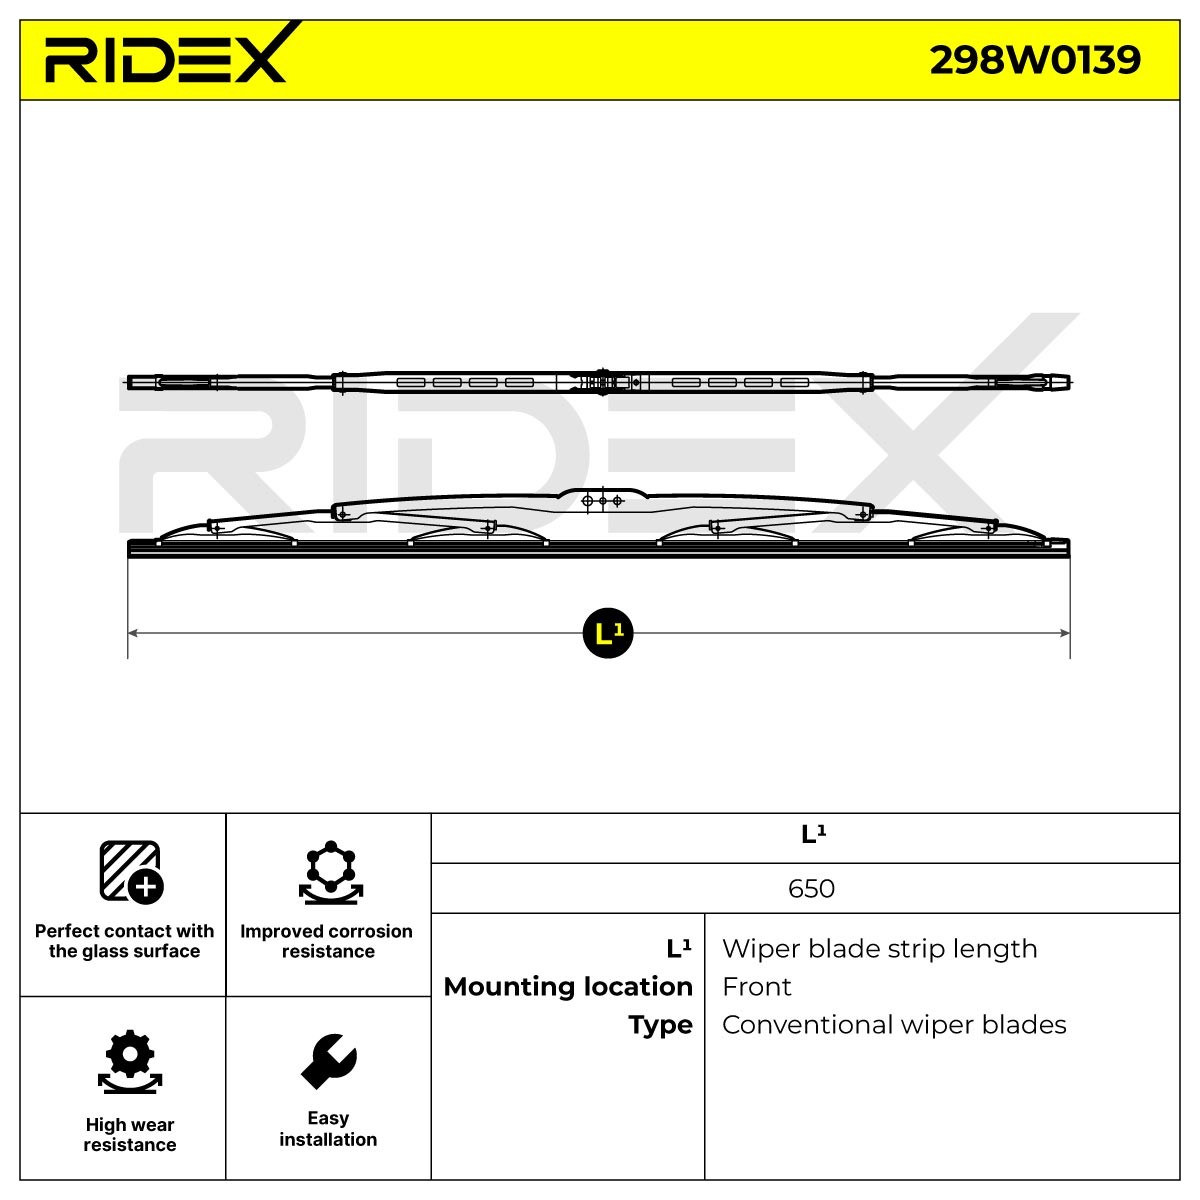 RIDEX Tergicristalli 298W0139 recensioni